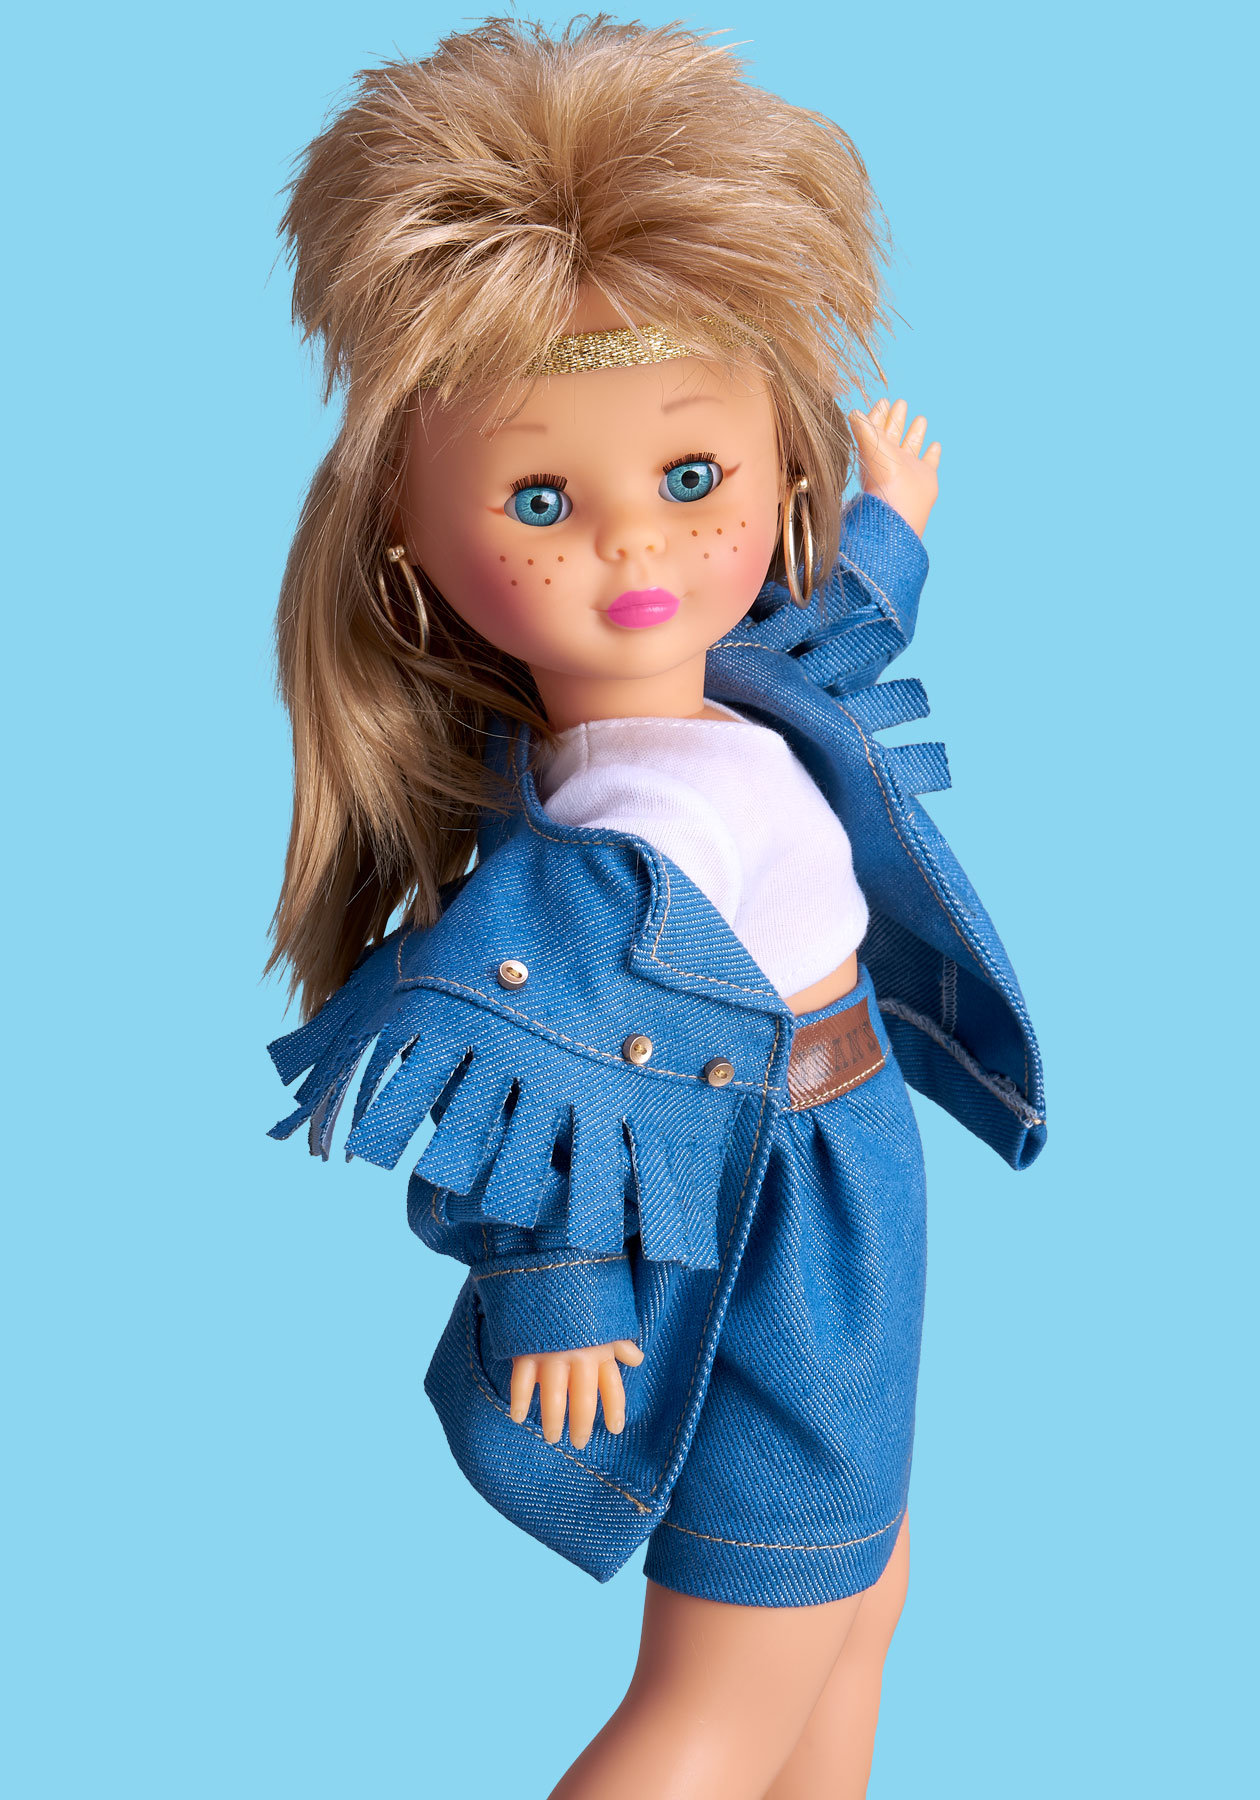 original muñeca de primera comunion de famosa a - Compra venta en